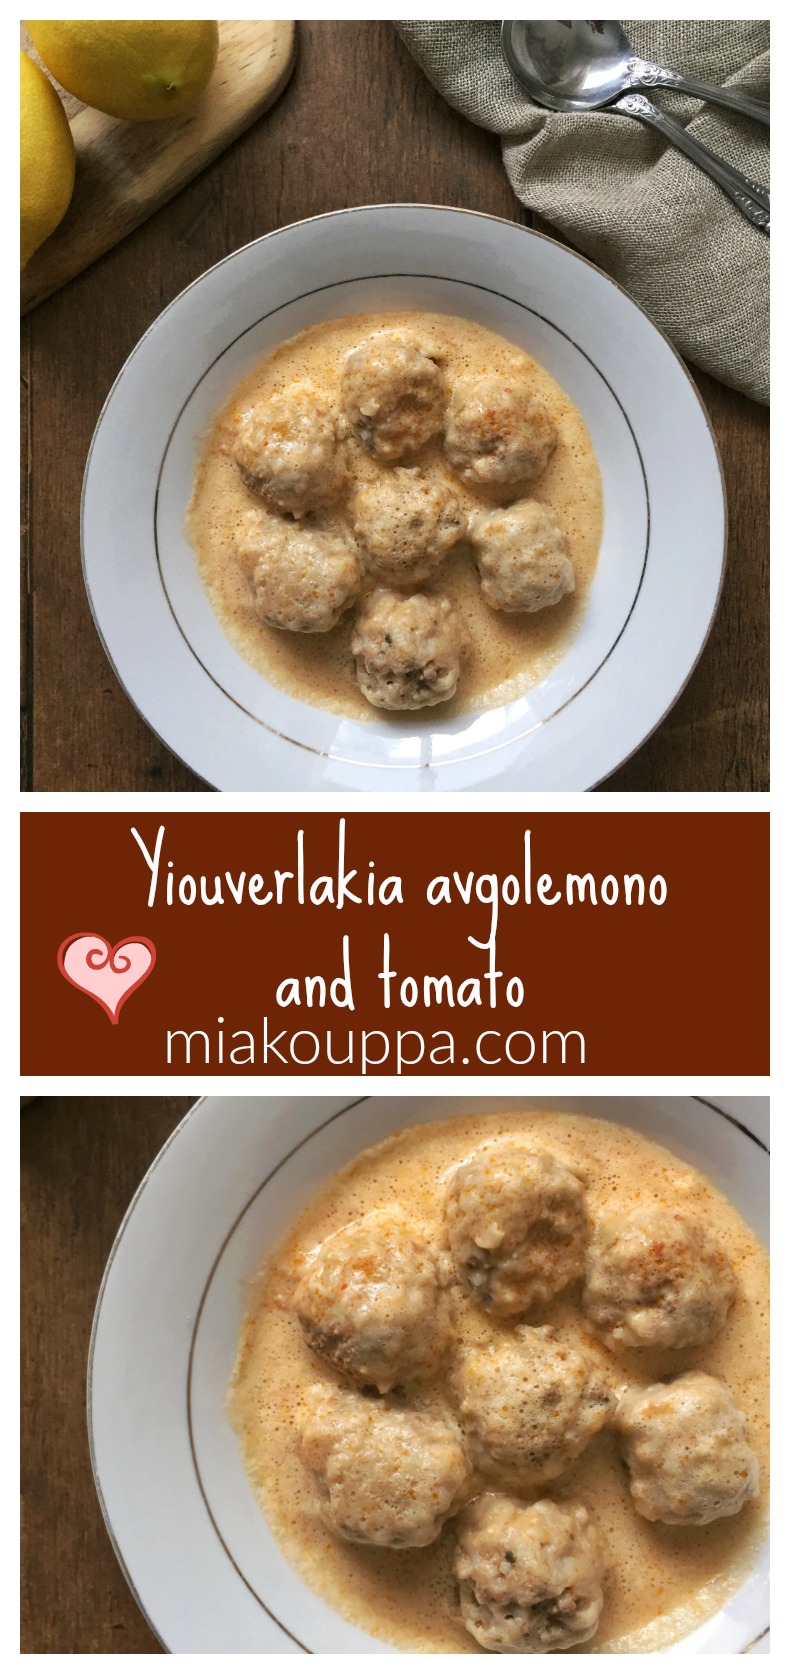 Yiouverlakia avgolemono and tomato (Γιουβαρλάκια αυγολέμονο με ντομάτα)